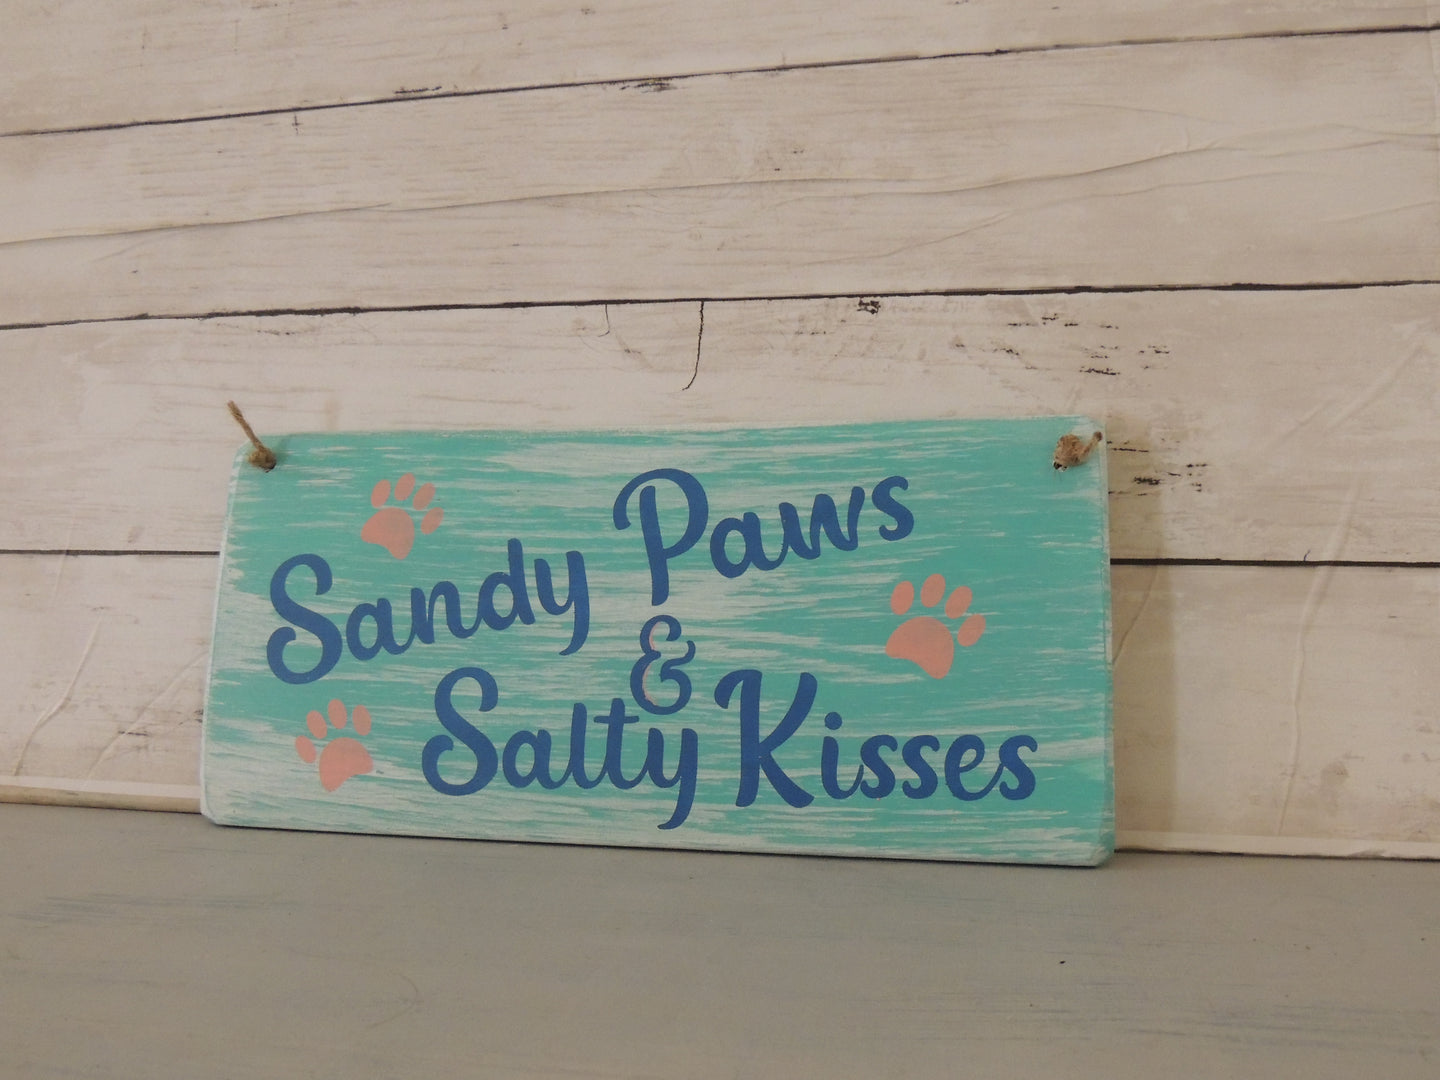 Sandy Paws & Salty Kisses